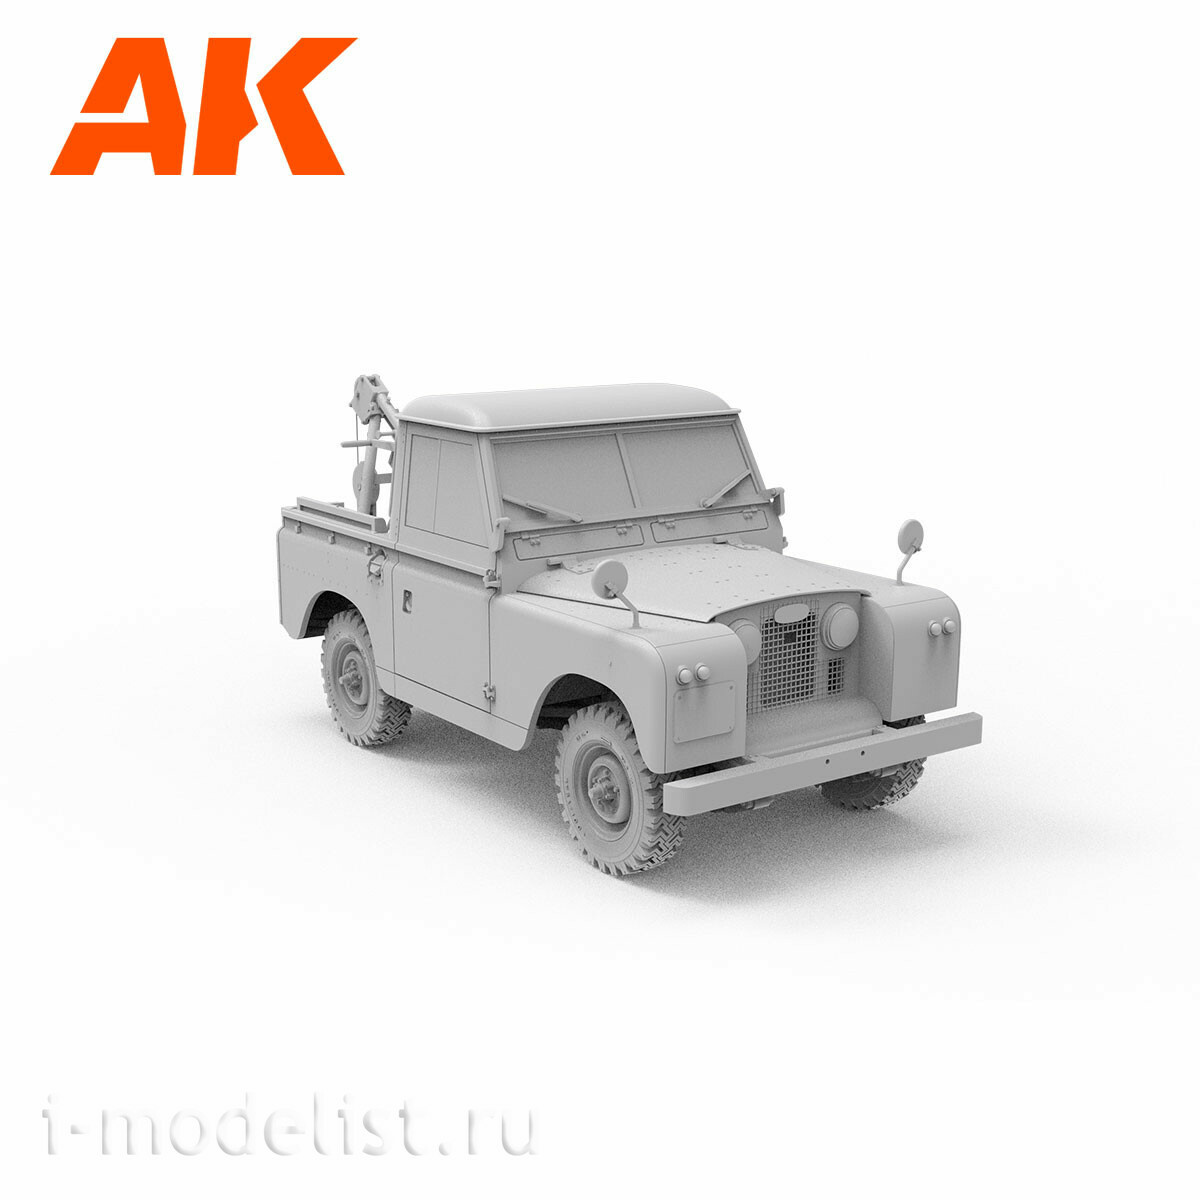 AK35014 AK Interactive 1/35 Внедорожник Land Rover 88 Series IIA Кран-эвакуатор